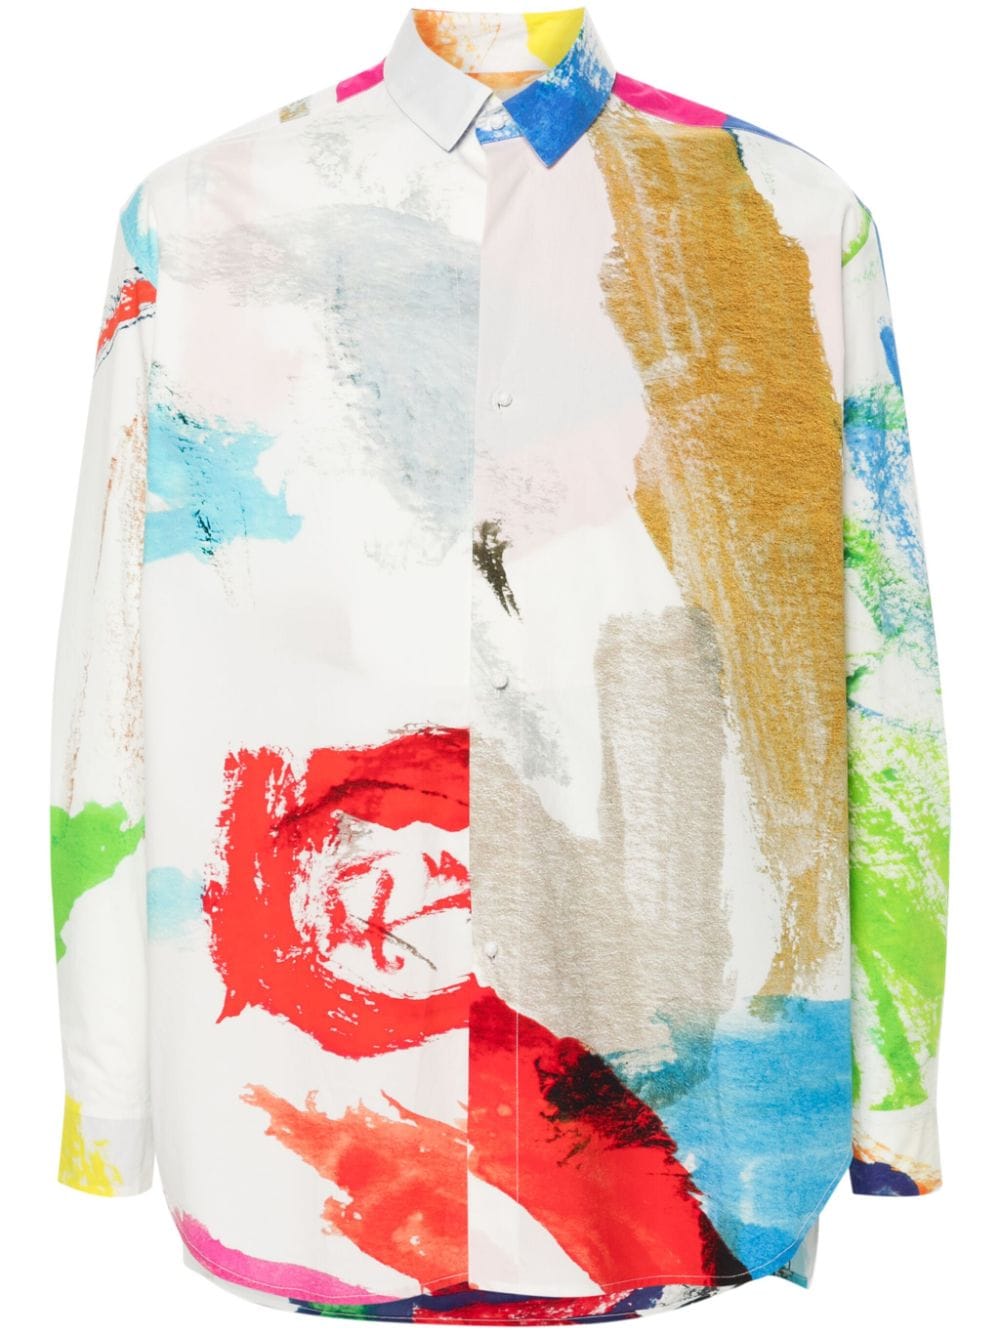 abstract-print cotton shirt